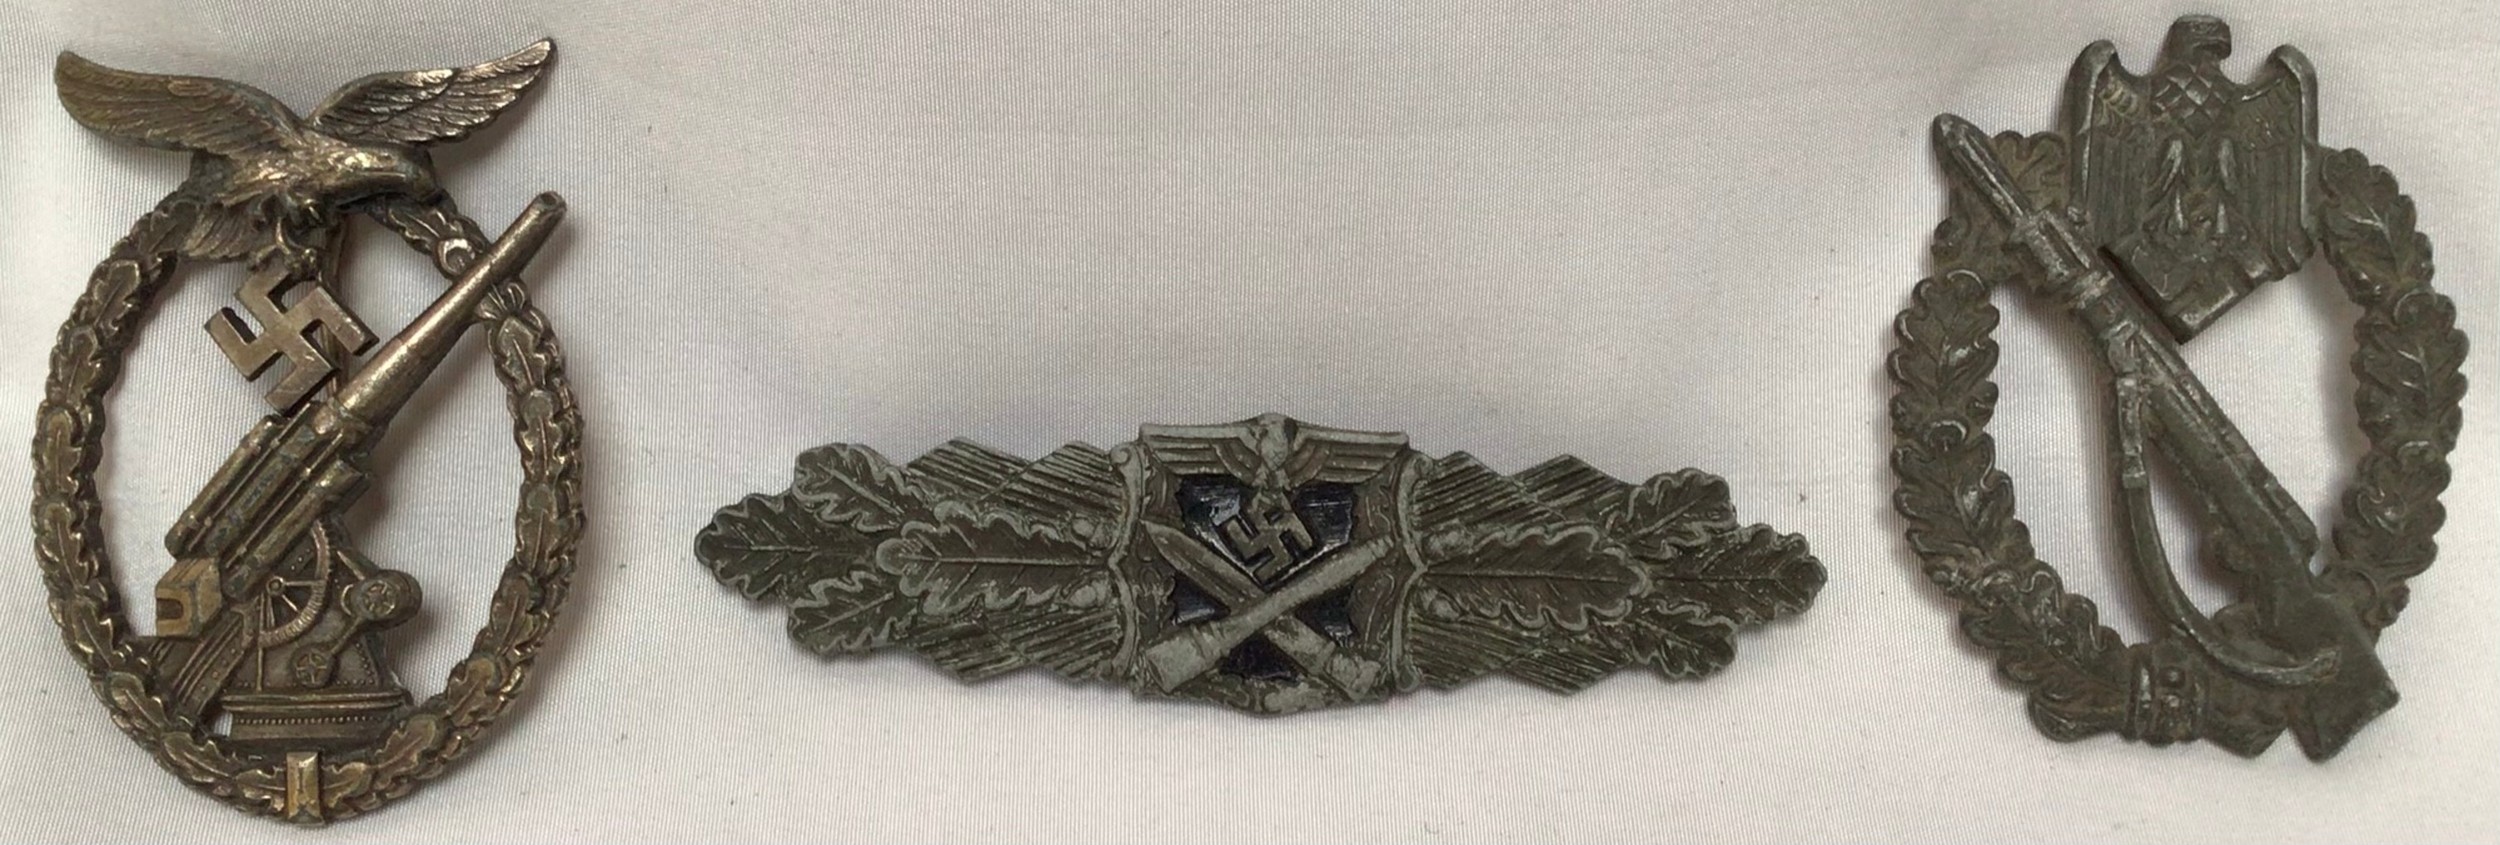 Three German WWII military badges, comprising Luftwaffe Anti-Aircraft Flak Battle Badge, Close